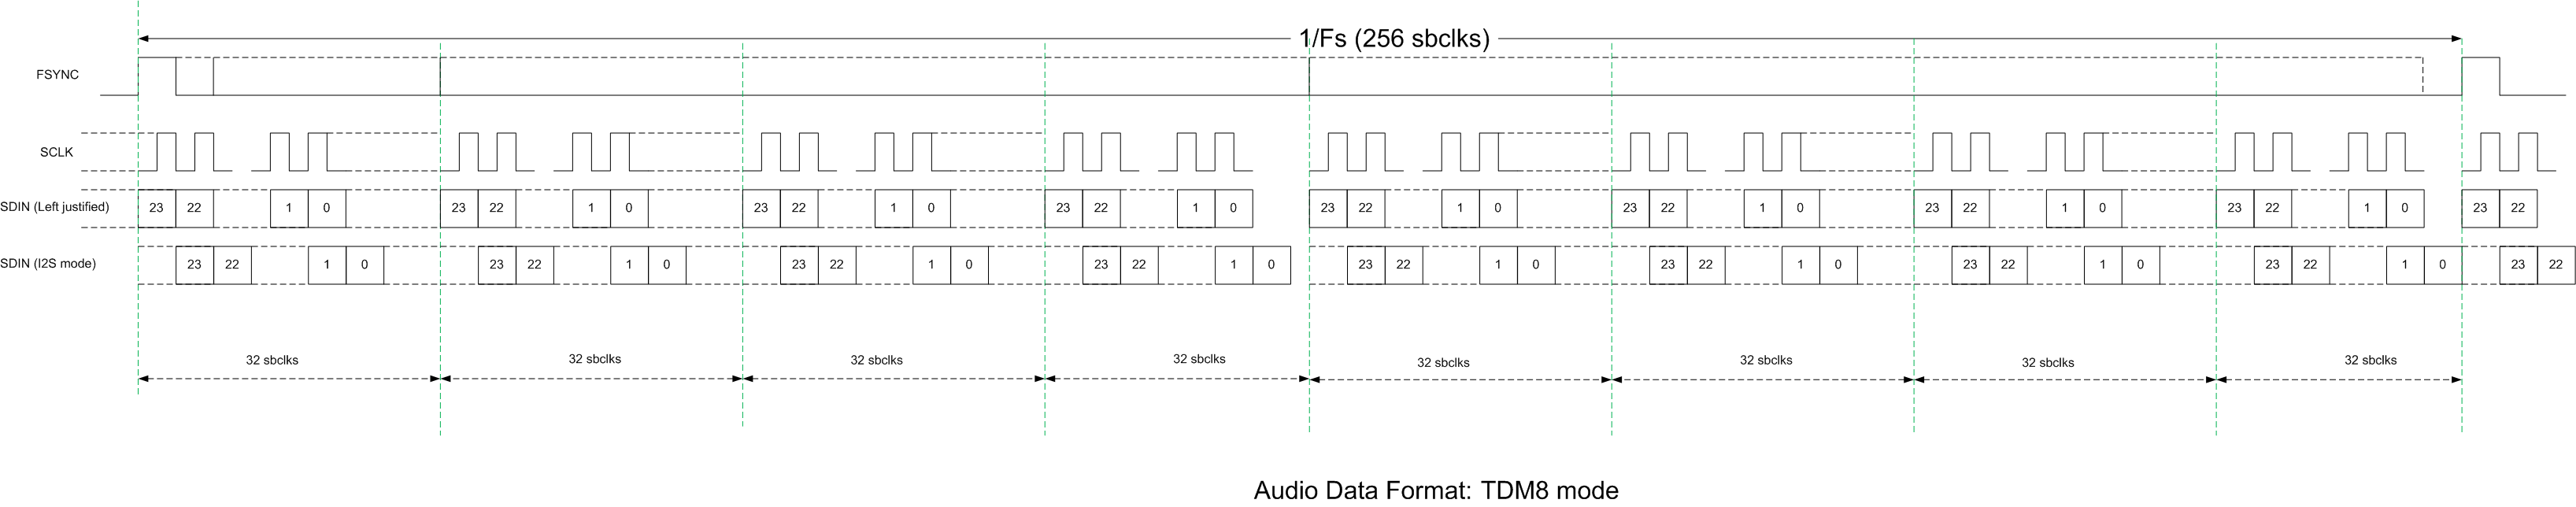 TAS6422-Q1 aud_data_format_TDMA_slos870.gif